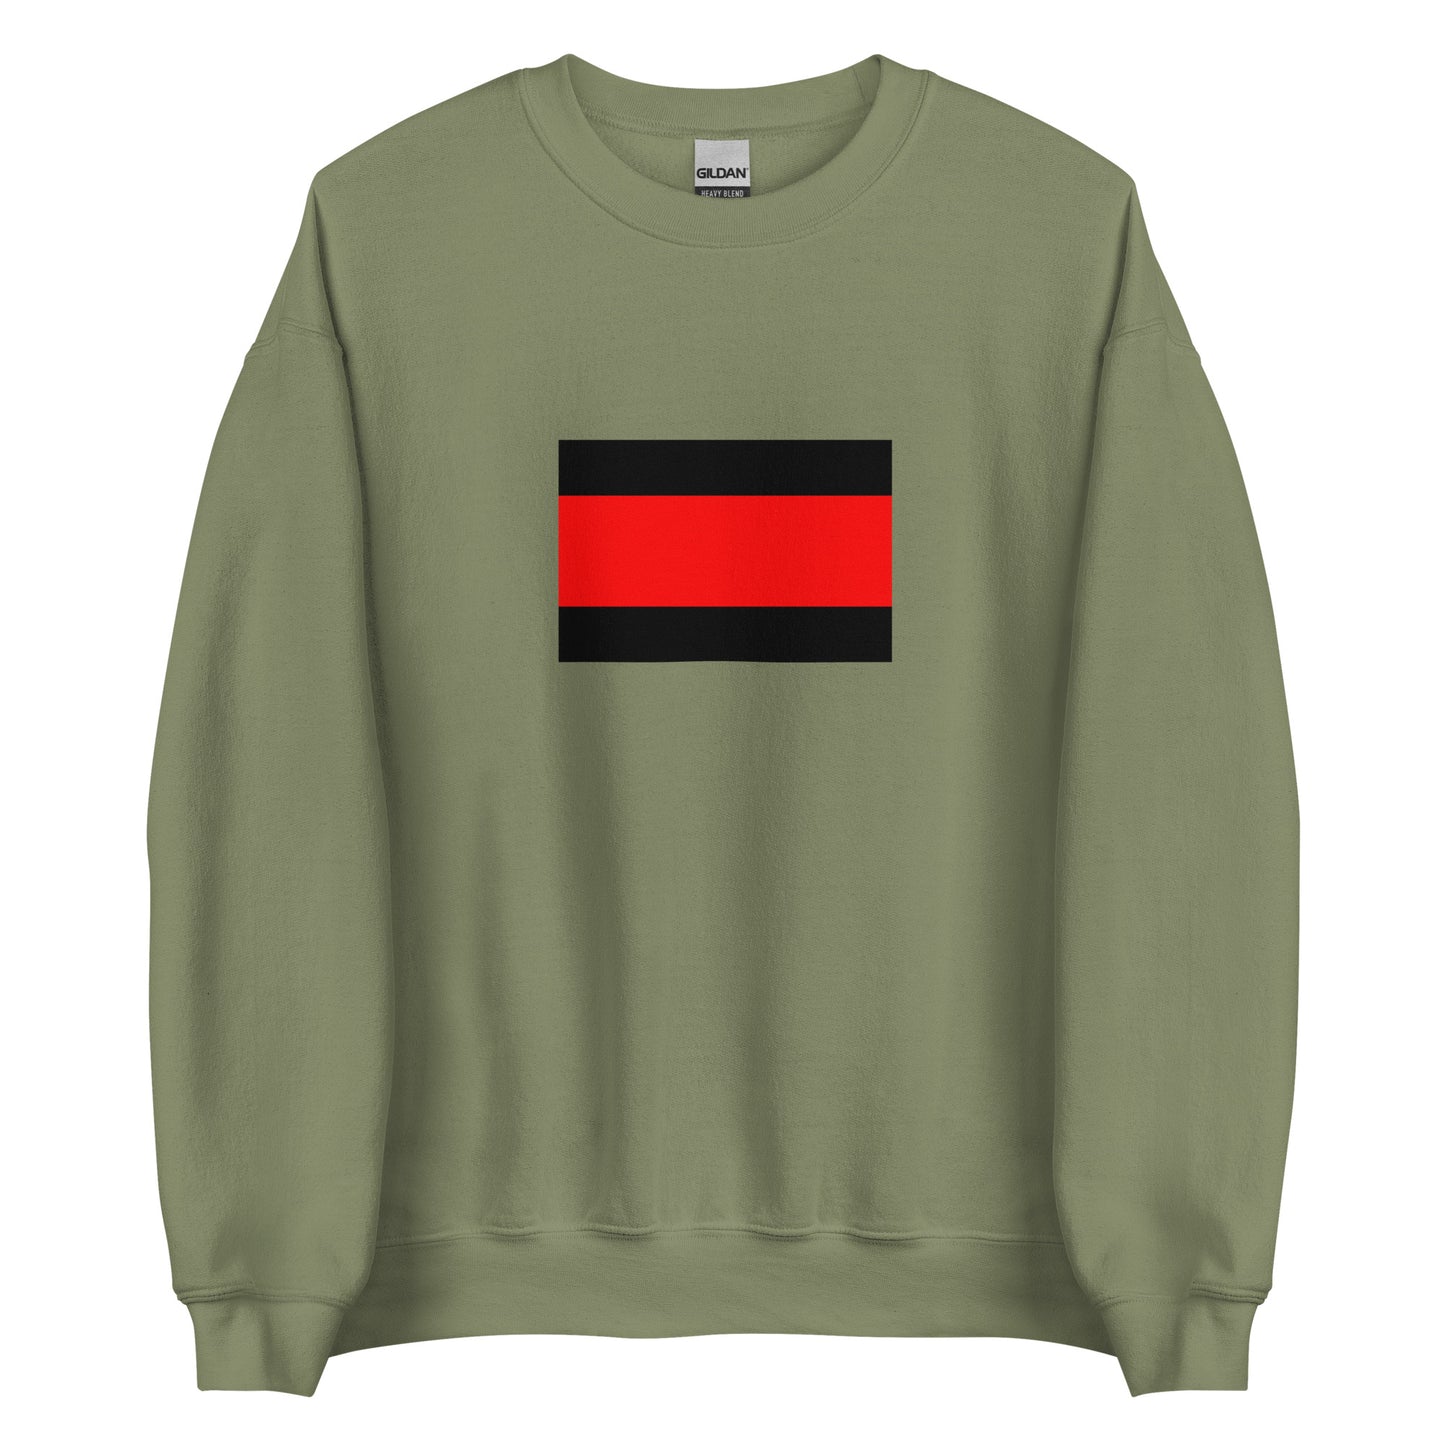 Czech Republic - Sudeten Germans | Ethnic Flag Unisex Sweatshirt